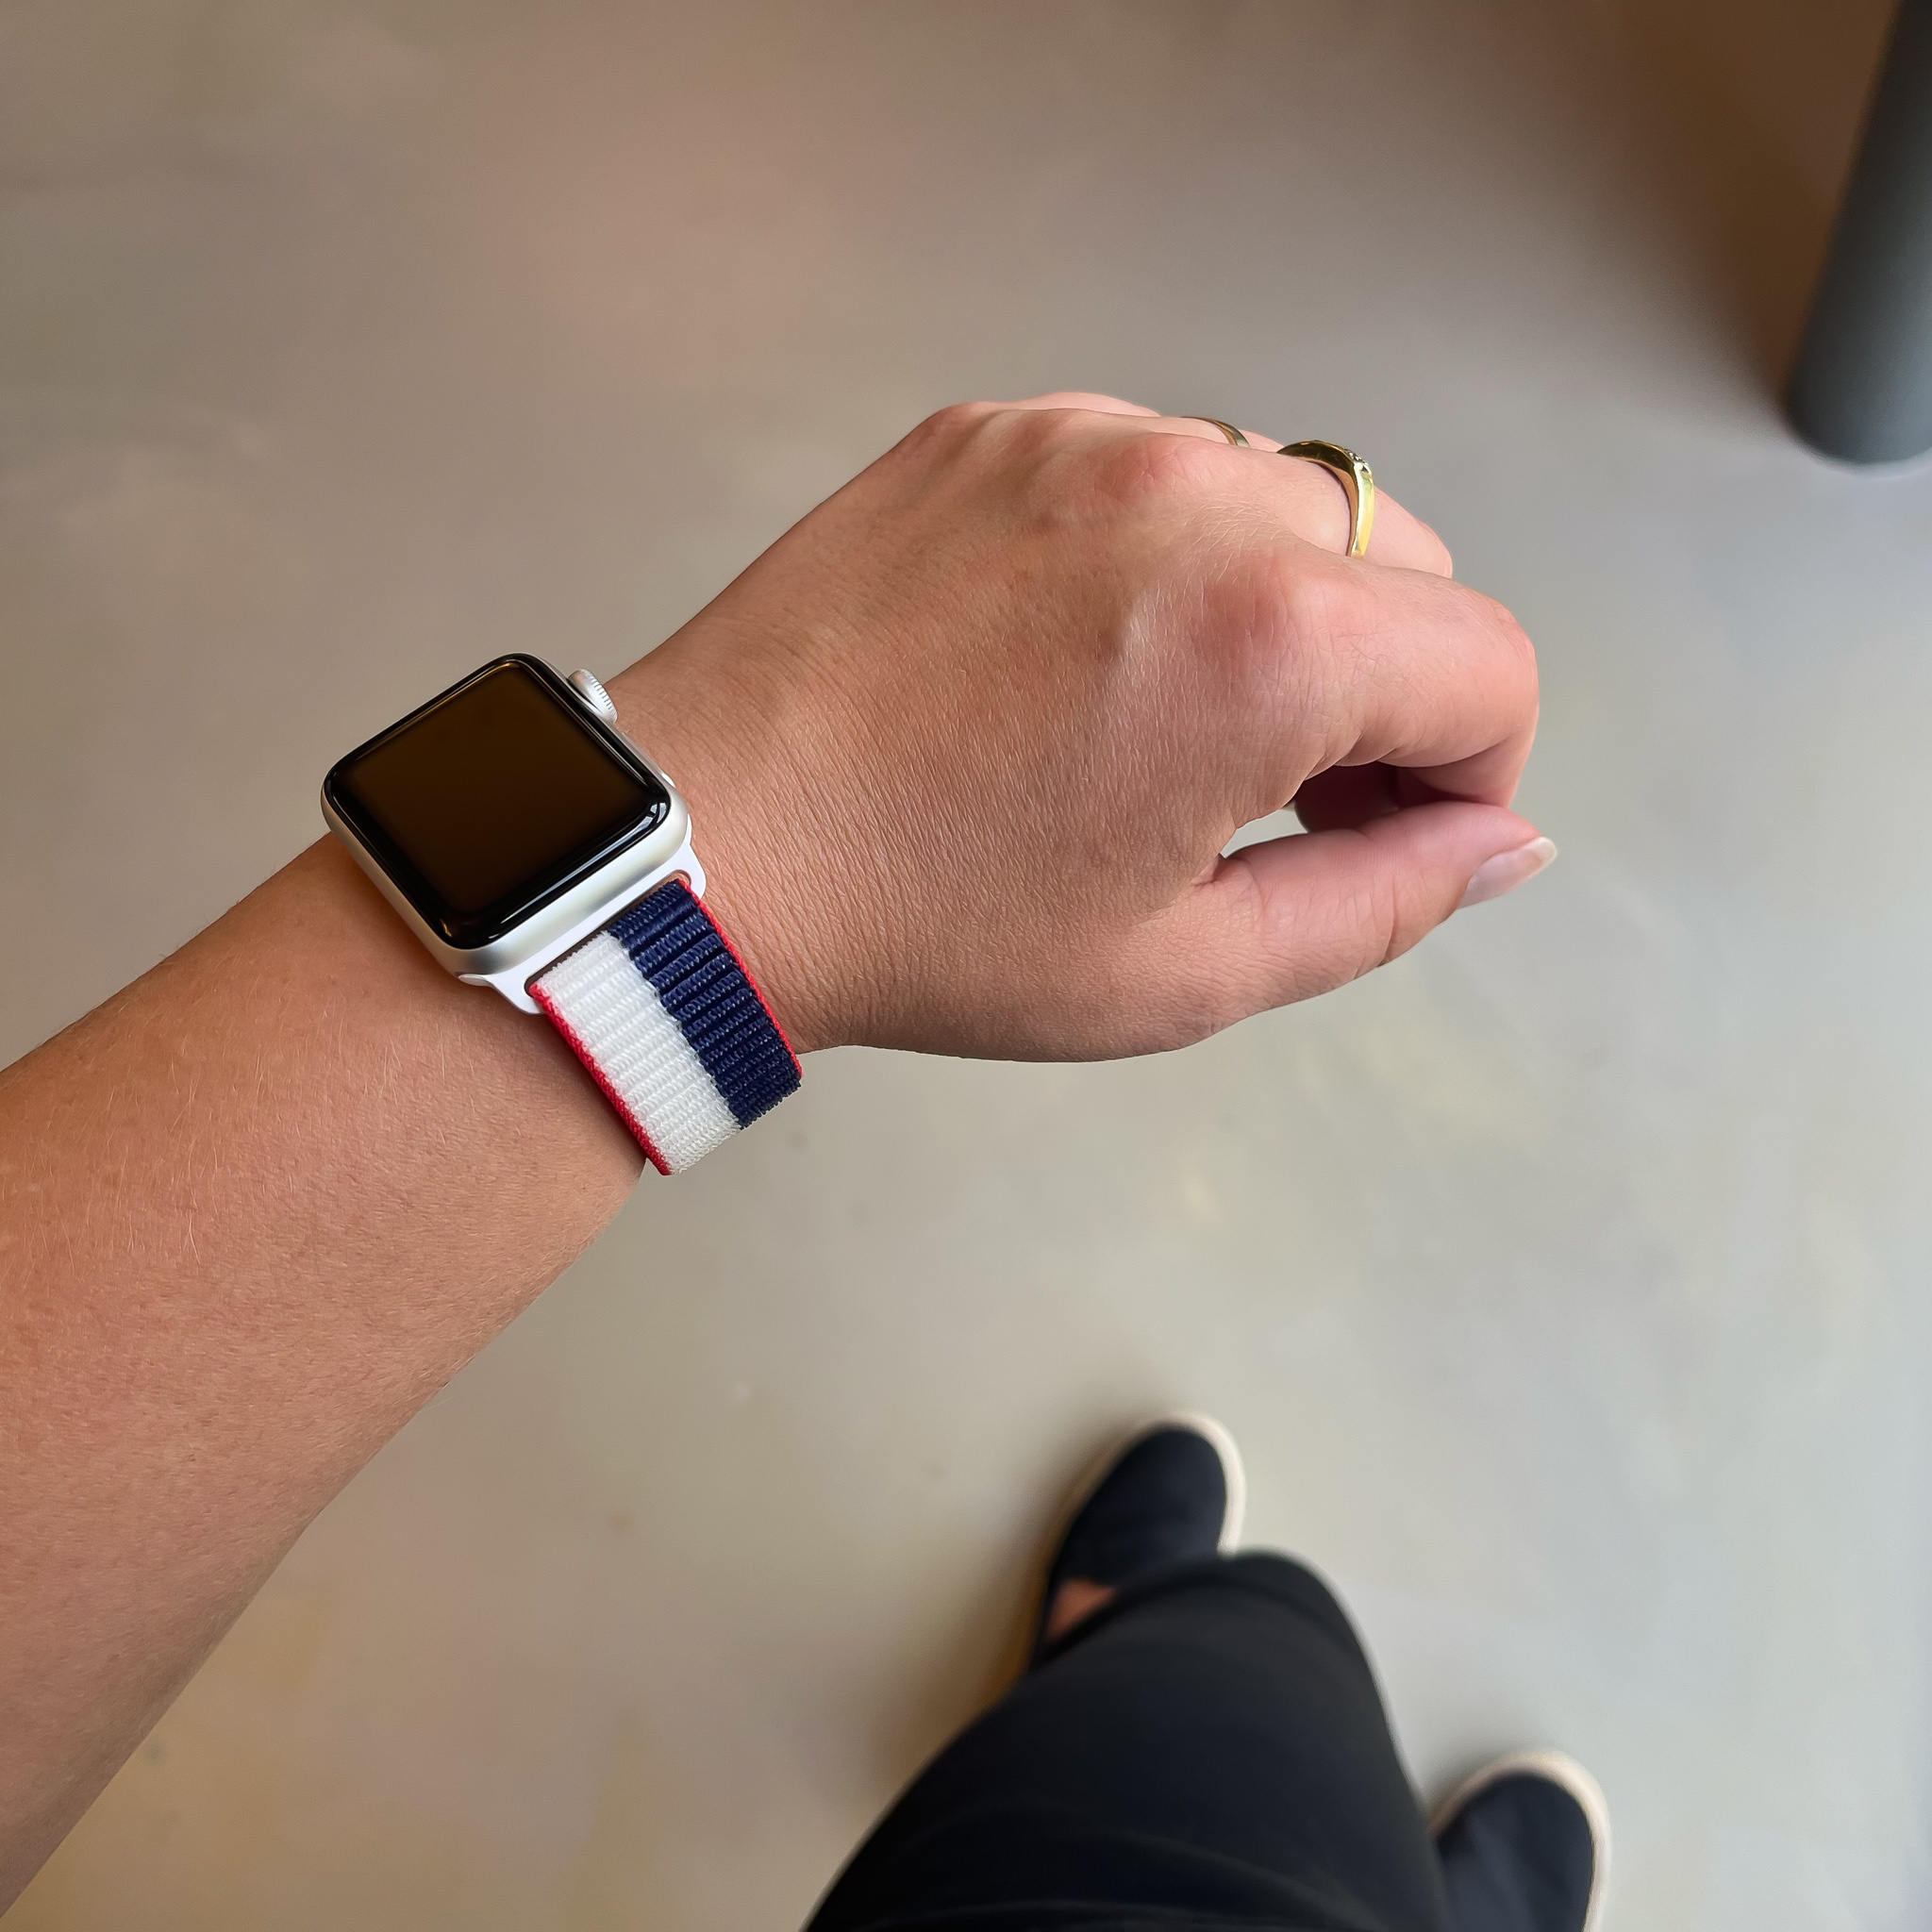 Bracelet boucle sport en nylon Apple Watch - États-Unis